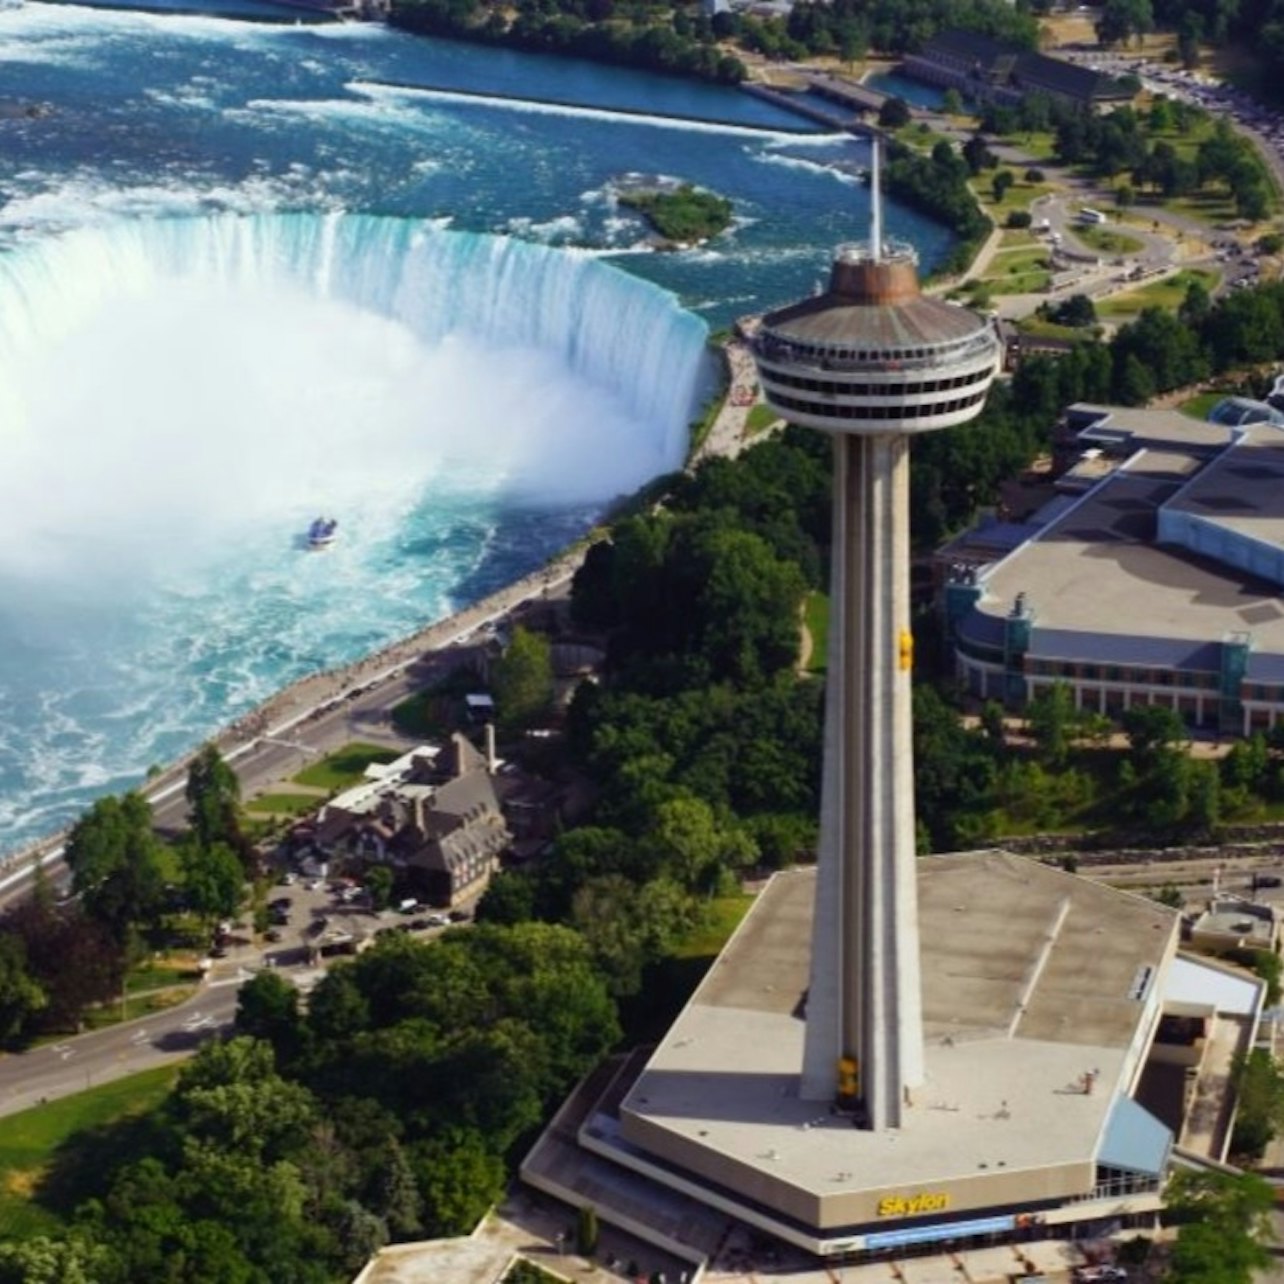 Skylon Tower Observation Deck - Accommodations in Niagara Falls